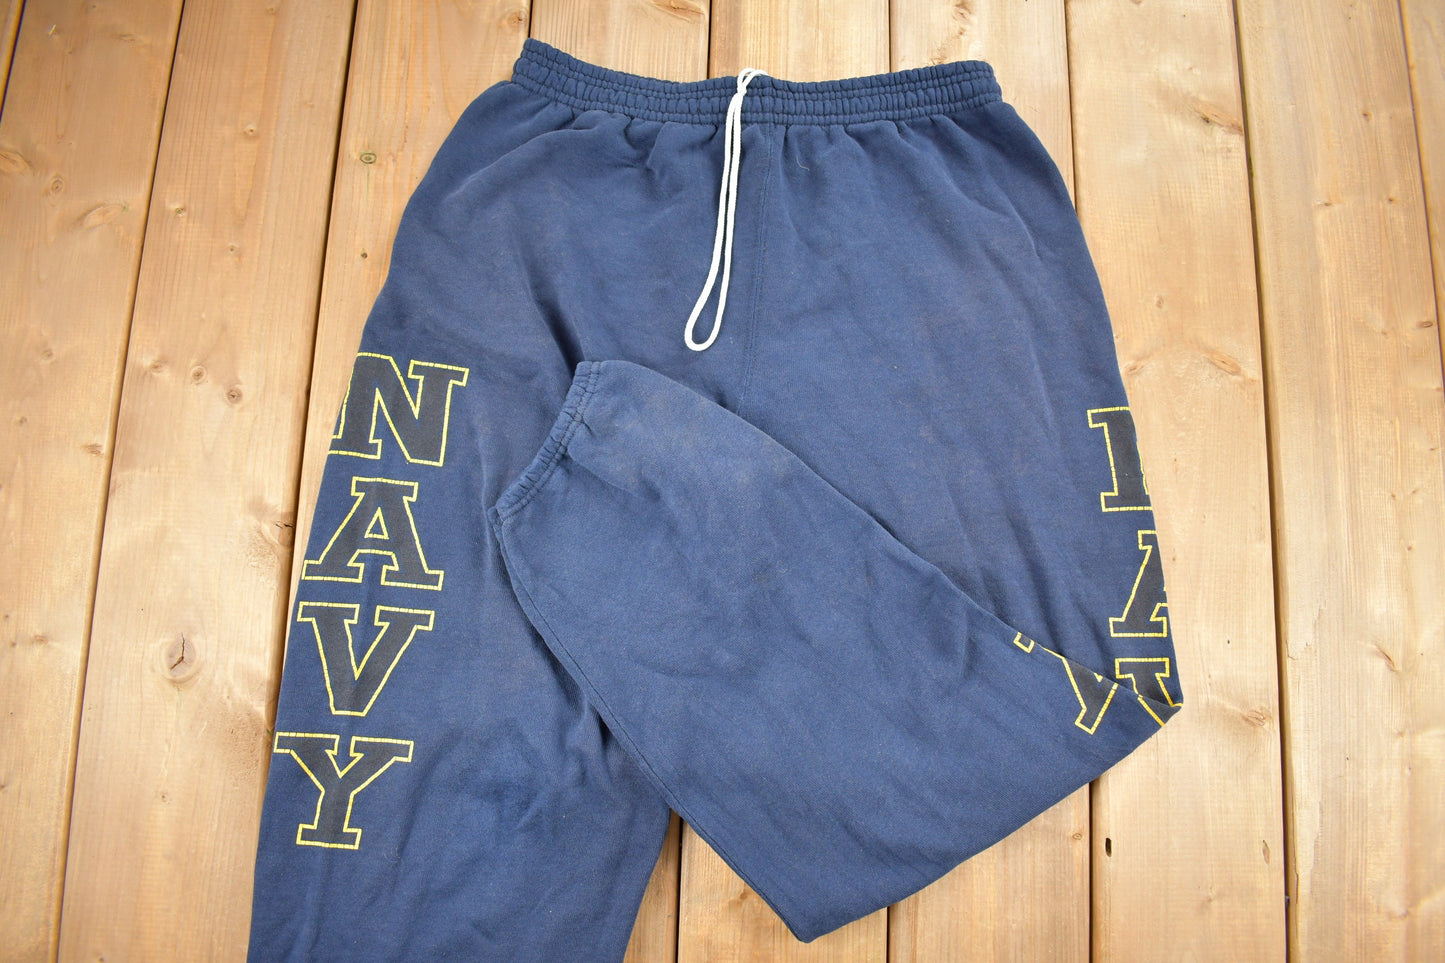 Vintage 1990s US Navy Sweatpants Size Medium / Elastic Waist / American Vintage / Military Fashion / Made In USA